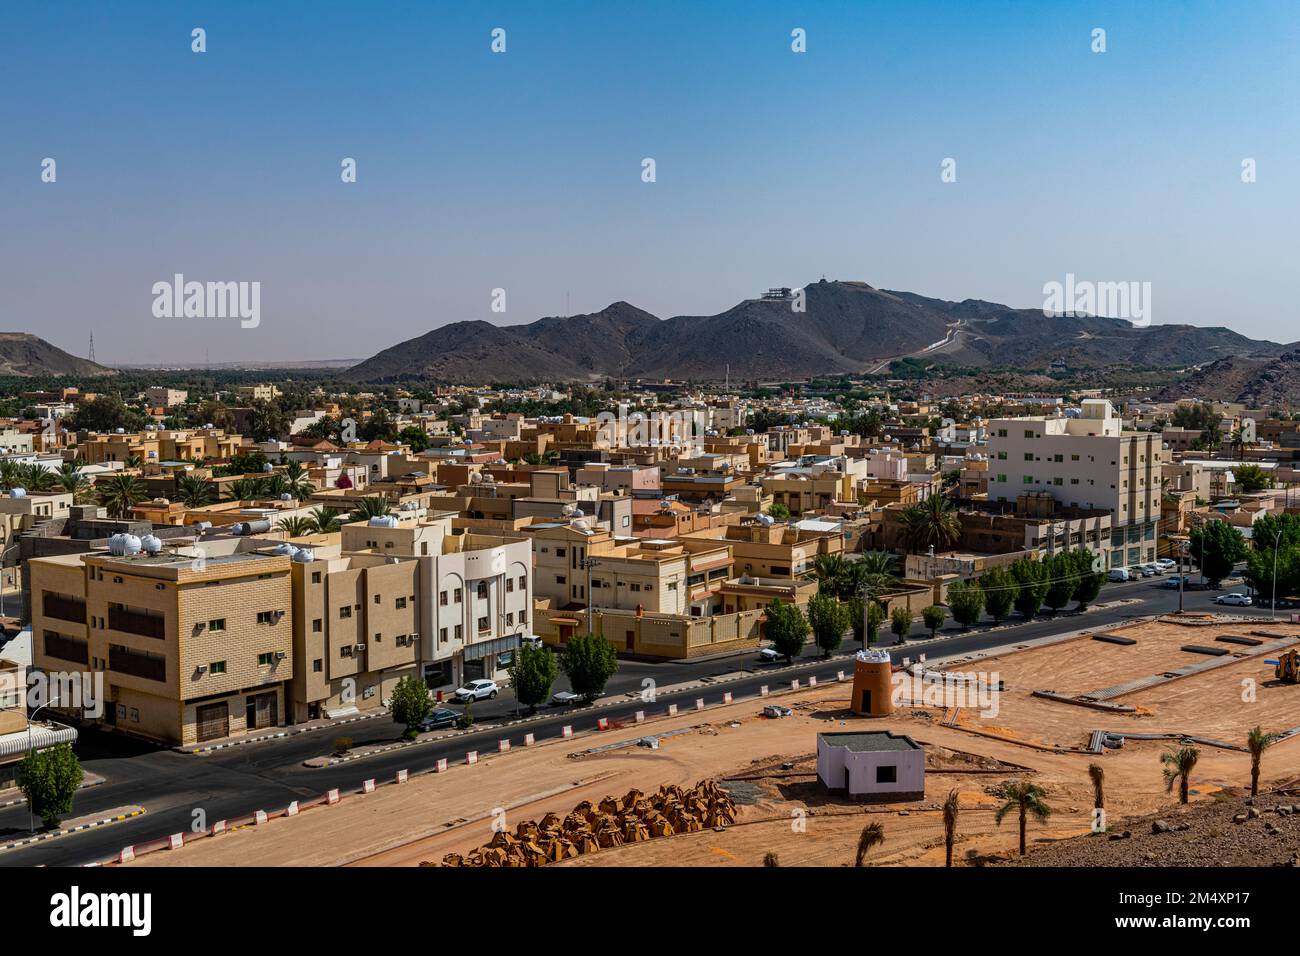 Saudi Arabia, Hail Province, Ha’il, Desert city with hills in background Stock Photo